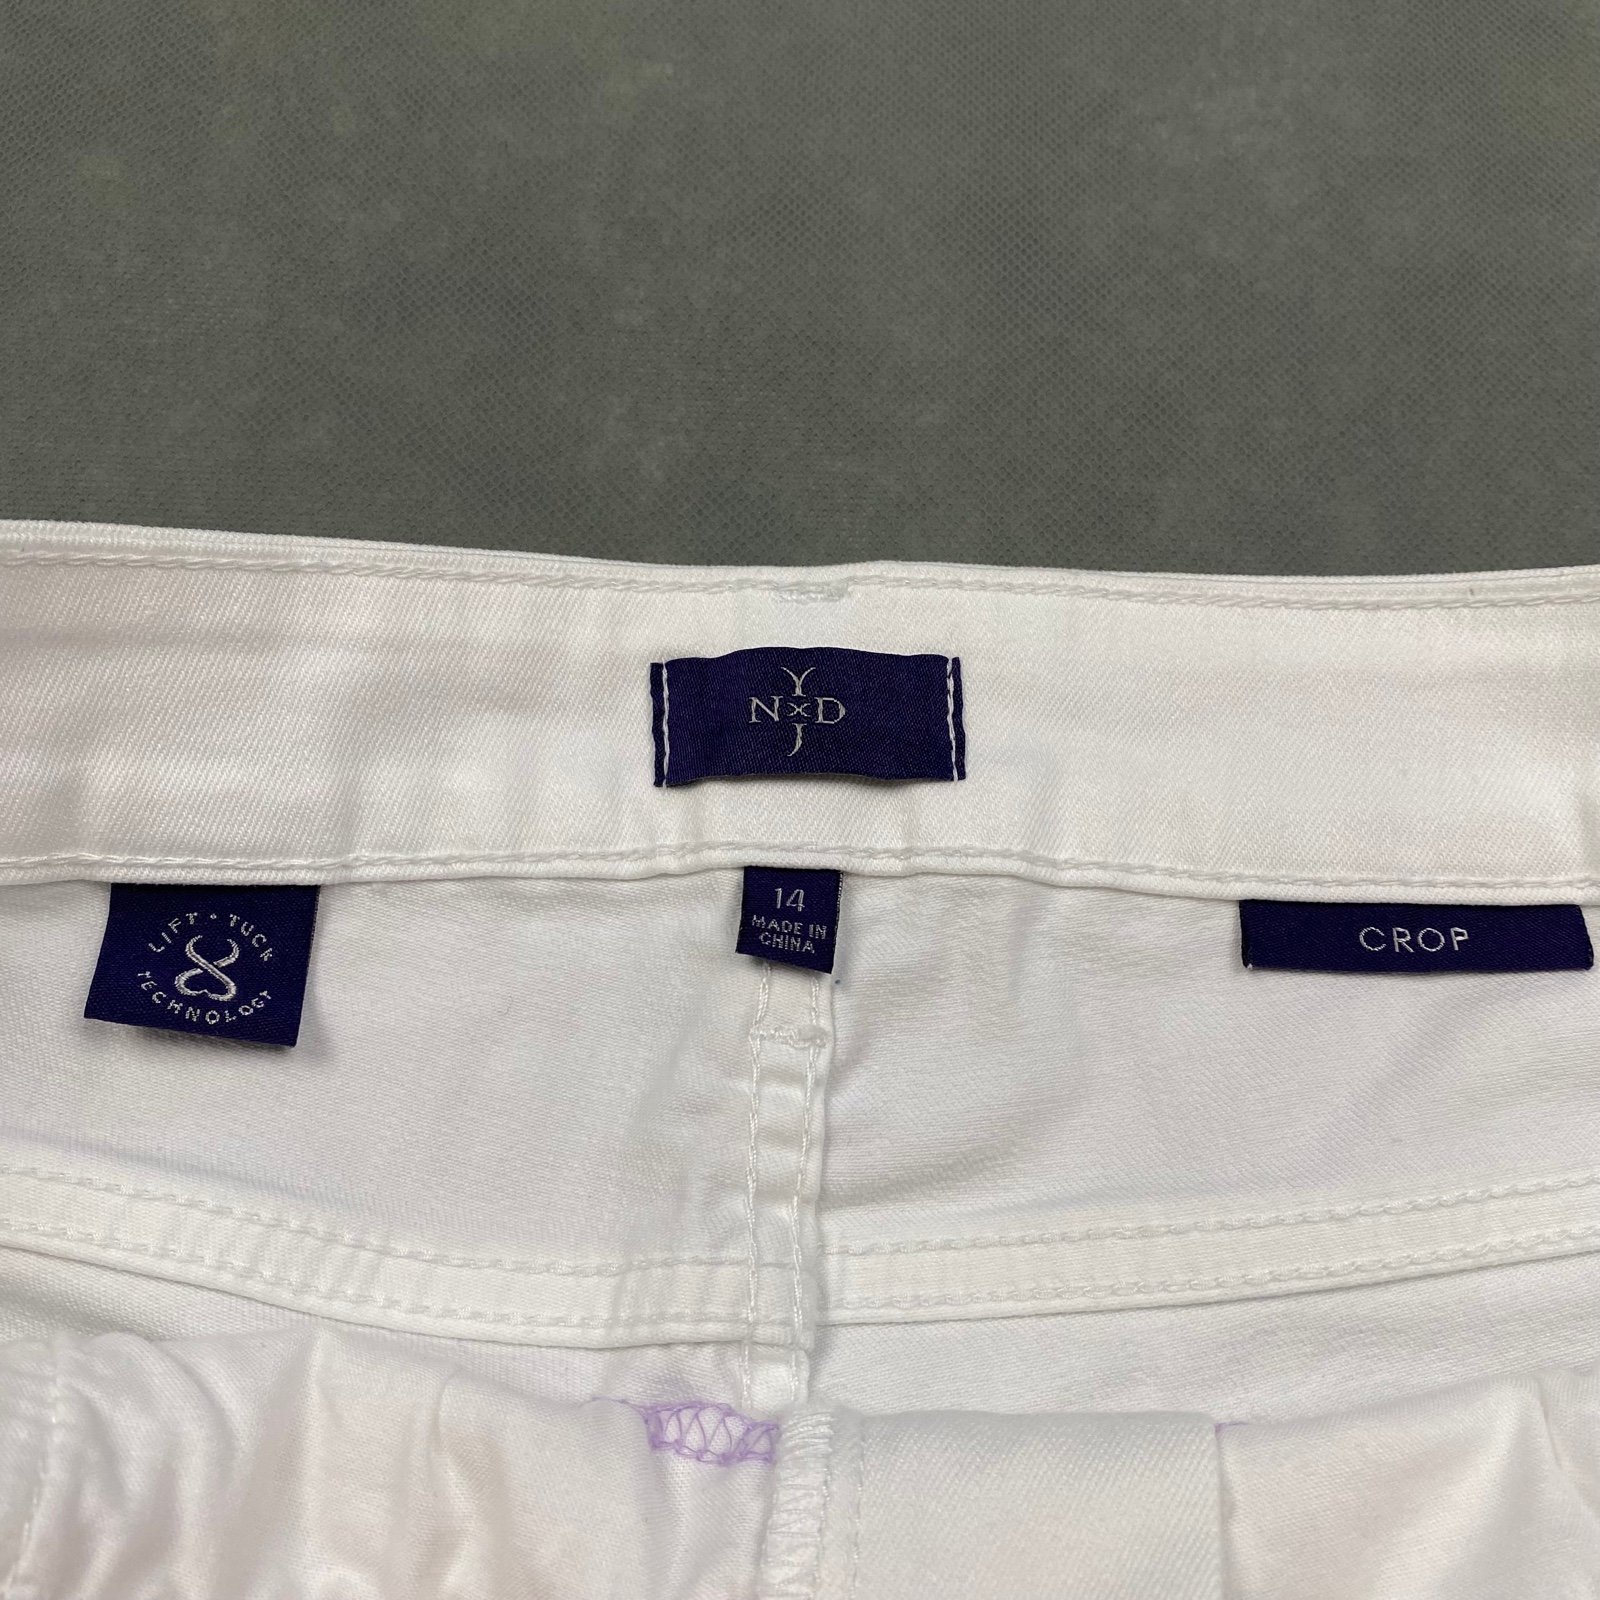 the Lowest price NYDJ White Crop Capri Jeans Lift Tuck - Size 14 LH8oTzO7G just buy it